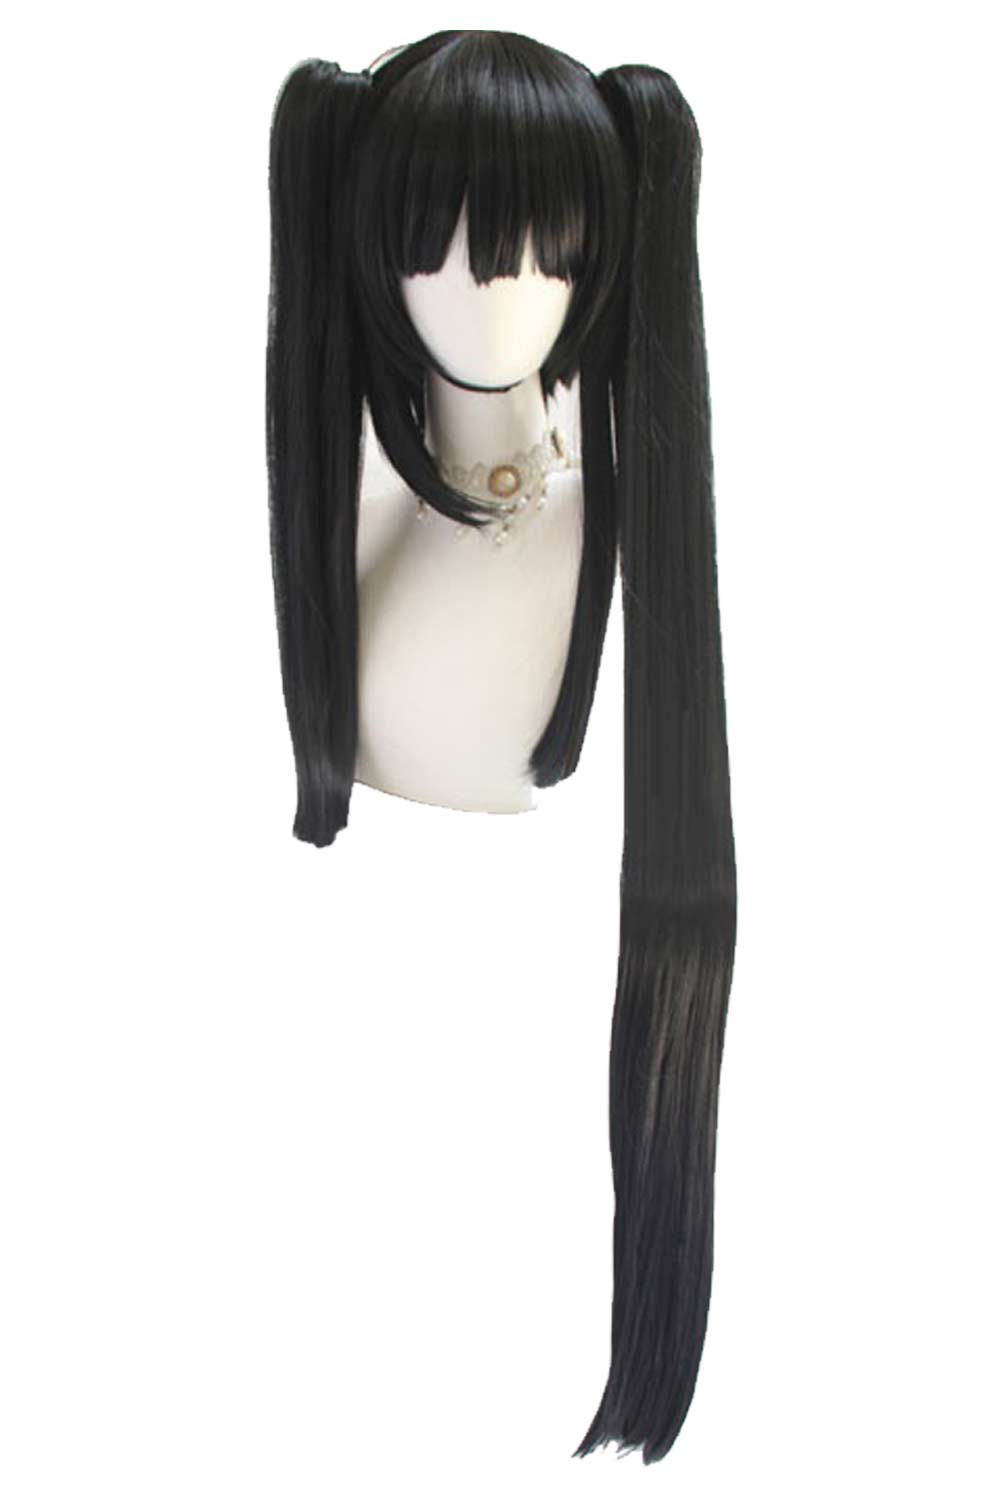 Anime Date A Live Tokisaki Kurumi Cosplay Wig Heat Resistant Synthetic Hair Halloween Costume Accessories